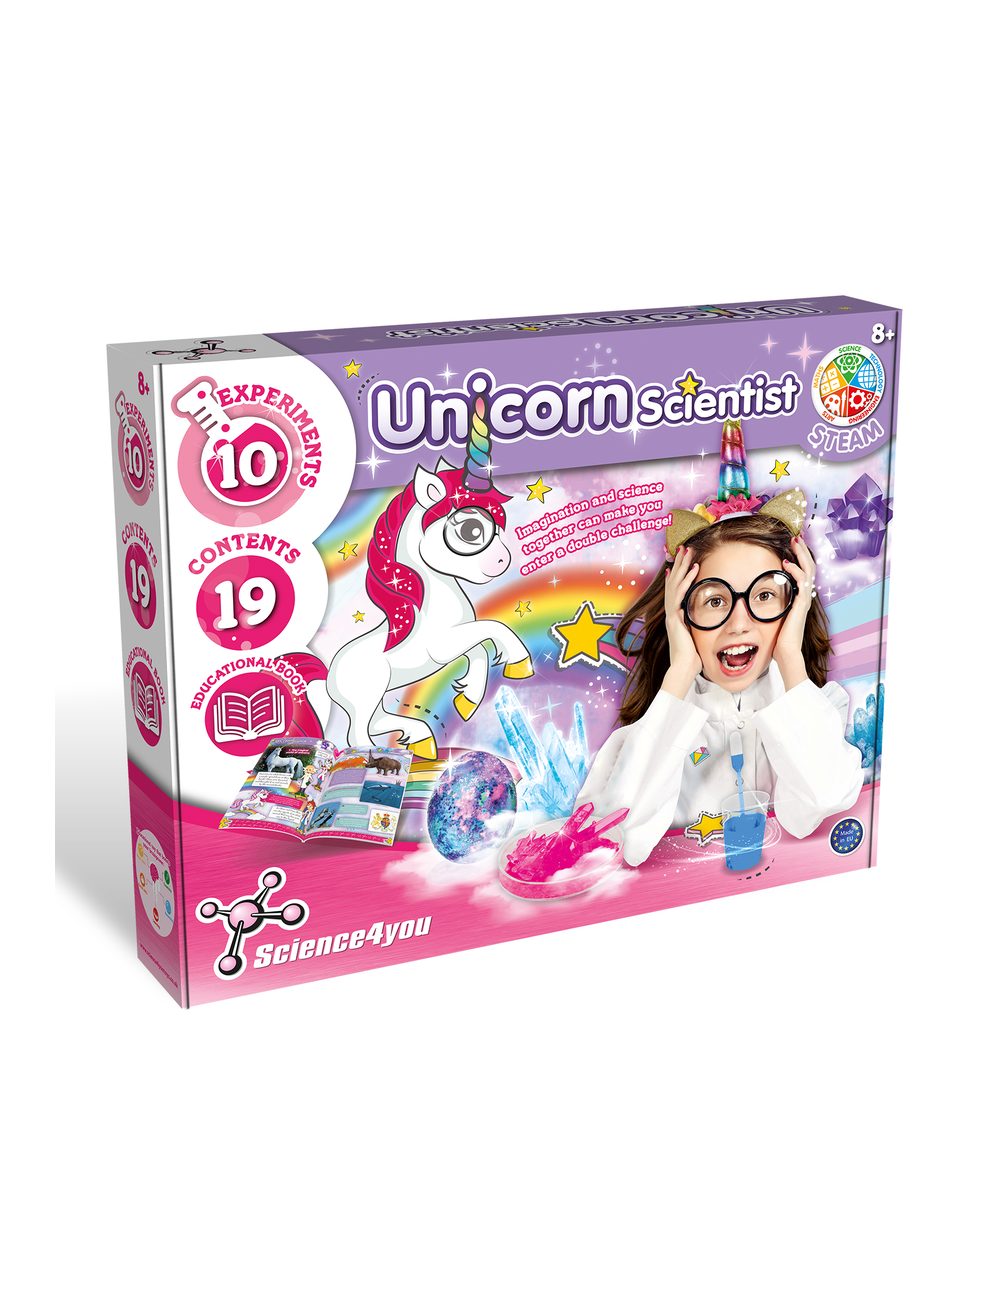 Science 4 You - Unicorn Scientist